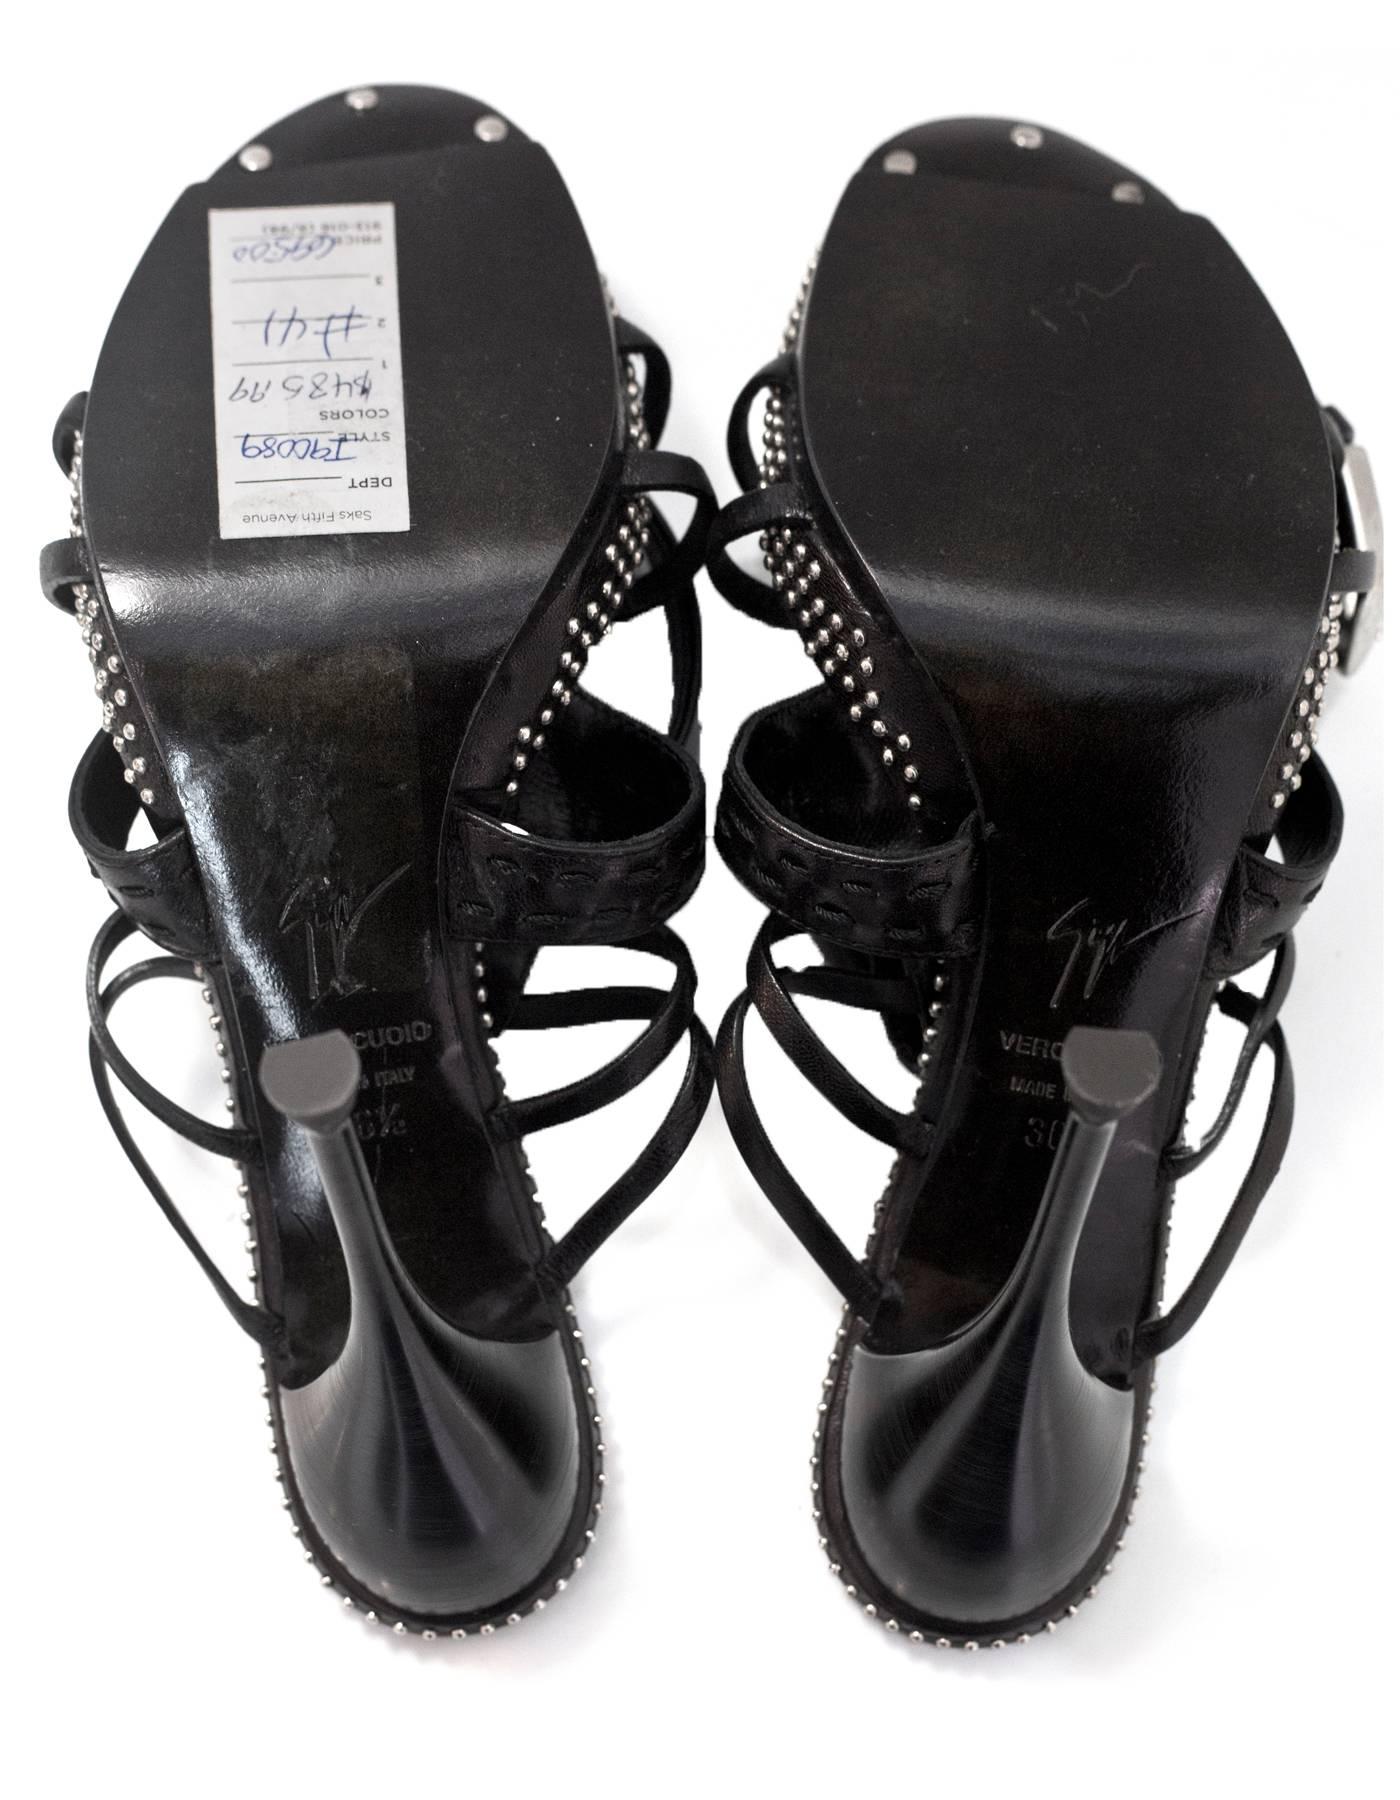 Giuseppe Zanotti Black Leather Studded Sandals Sz 36.5 1